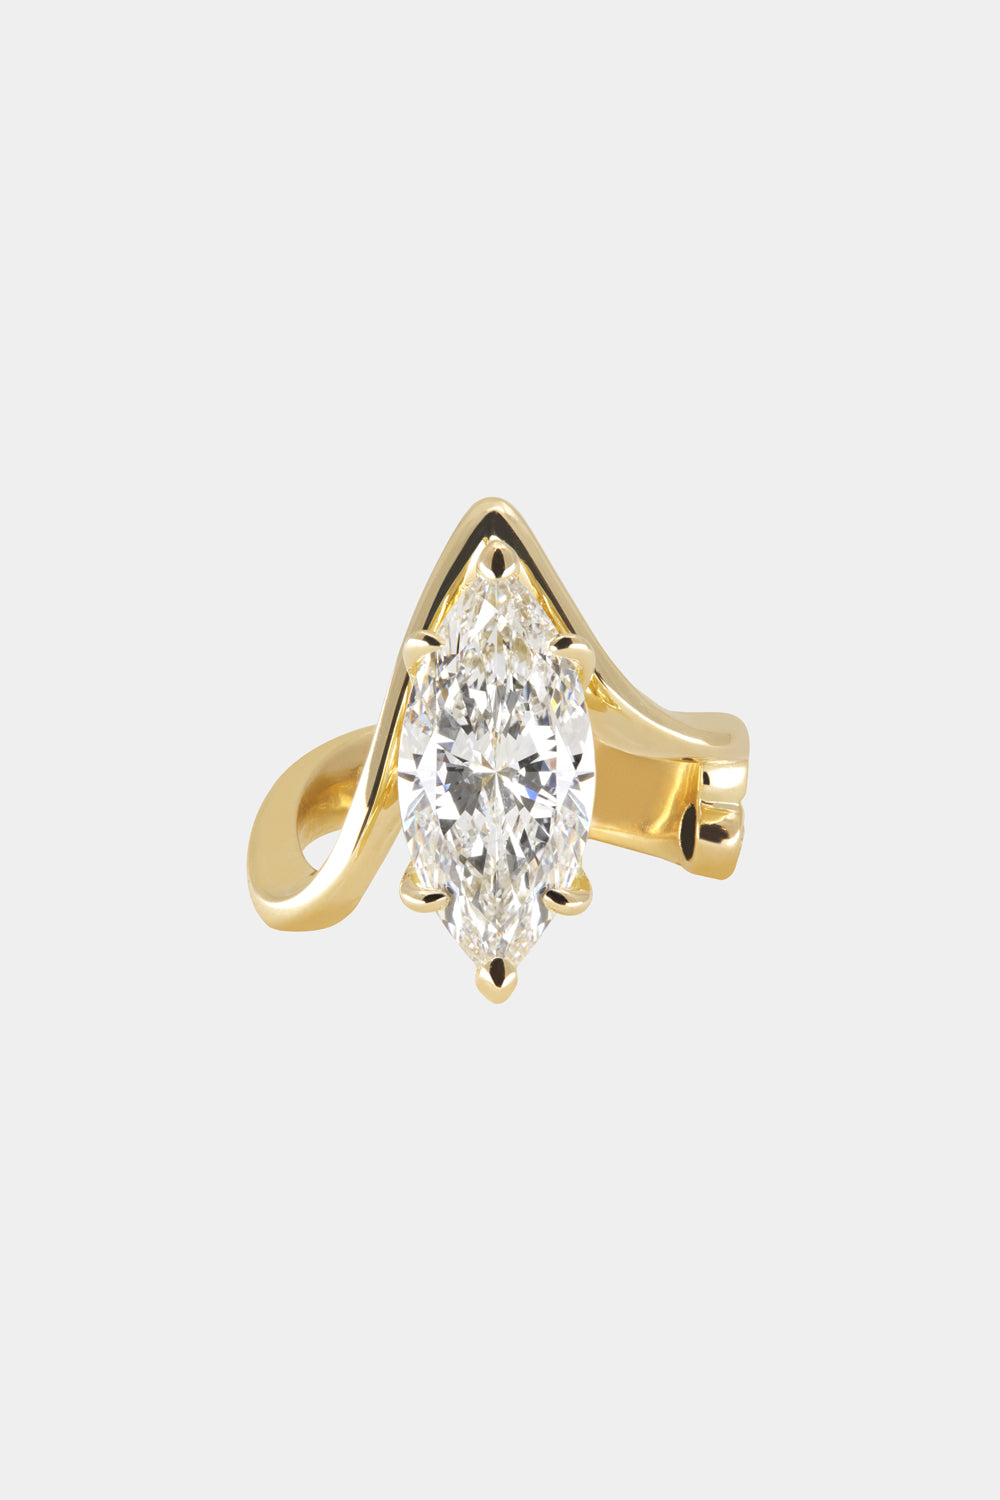 Alex Marquise Diamond Ring | 18K Gold